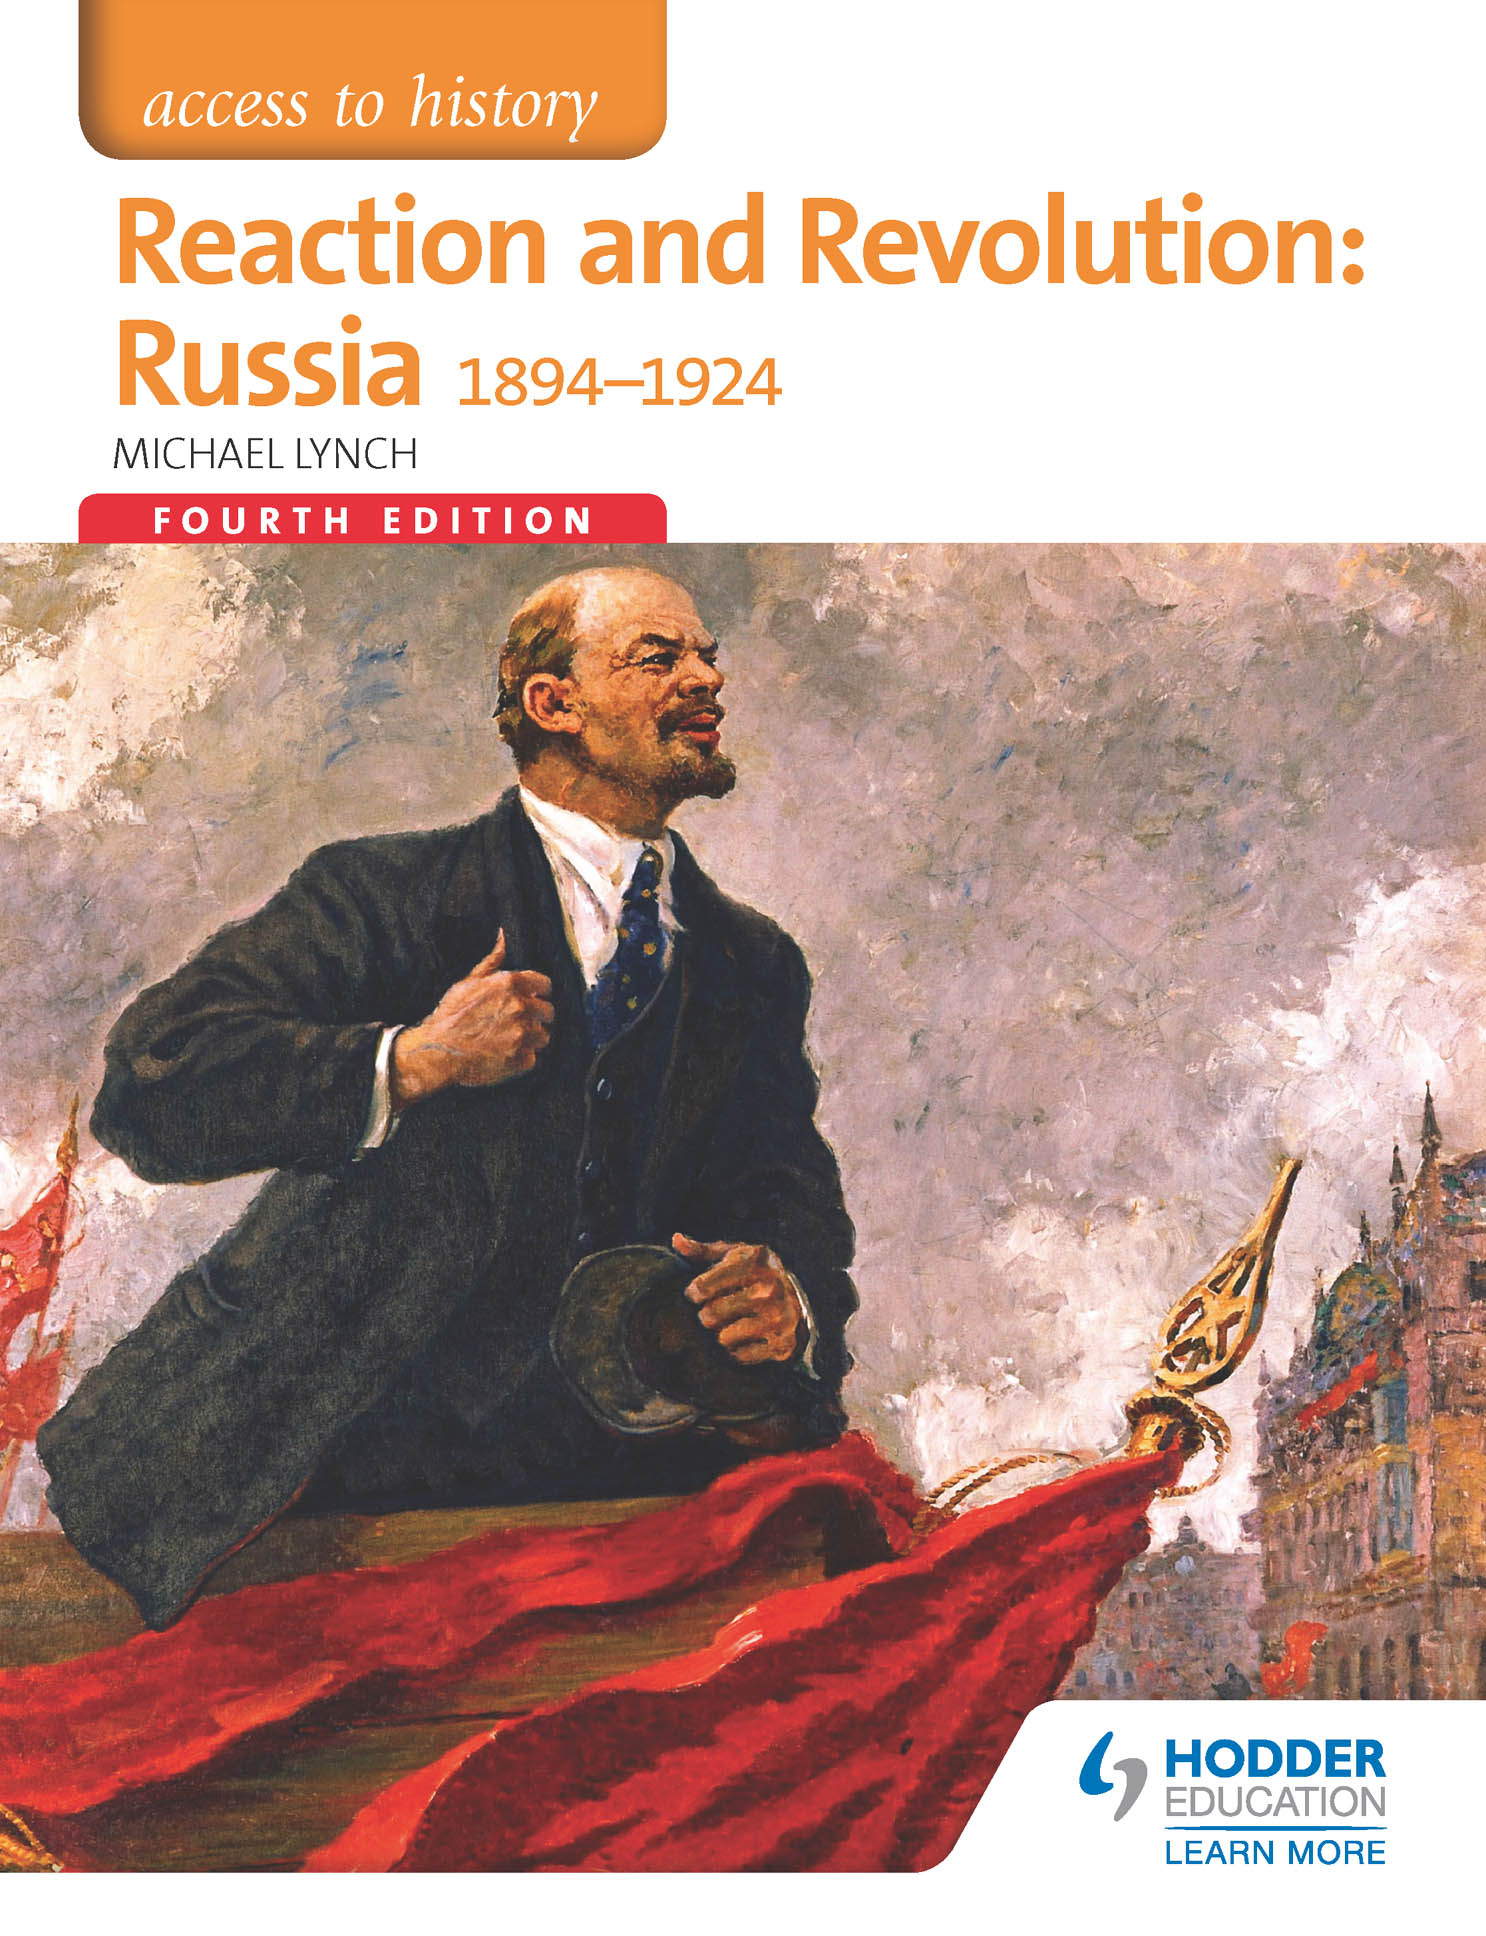 [DESCATALOGADO] Access to History: Reaction and Revolution: Russia 1894-1924 Fourth Edition